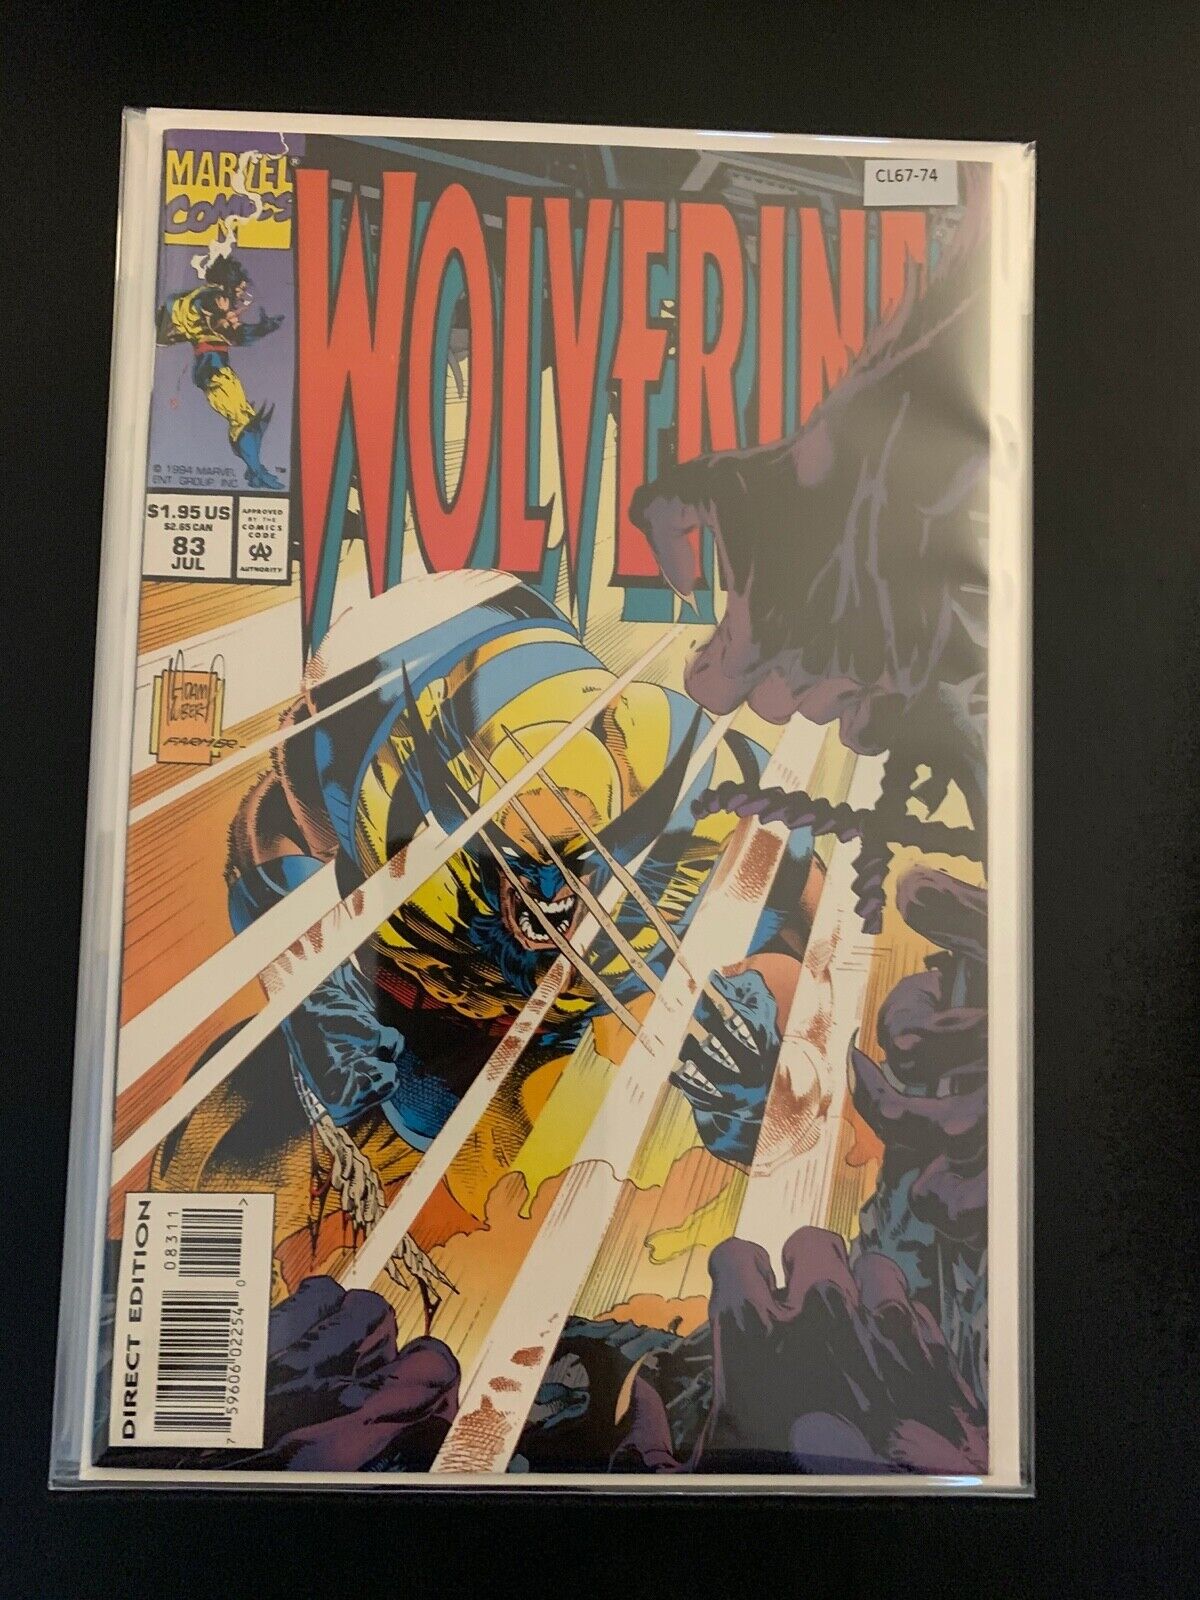 Wolverine #83 Gem Mint Uncirculated Marvel Comic Book CL67-74